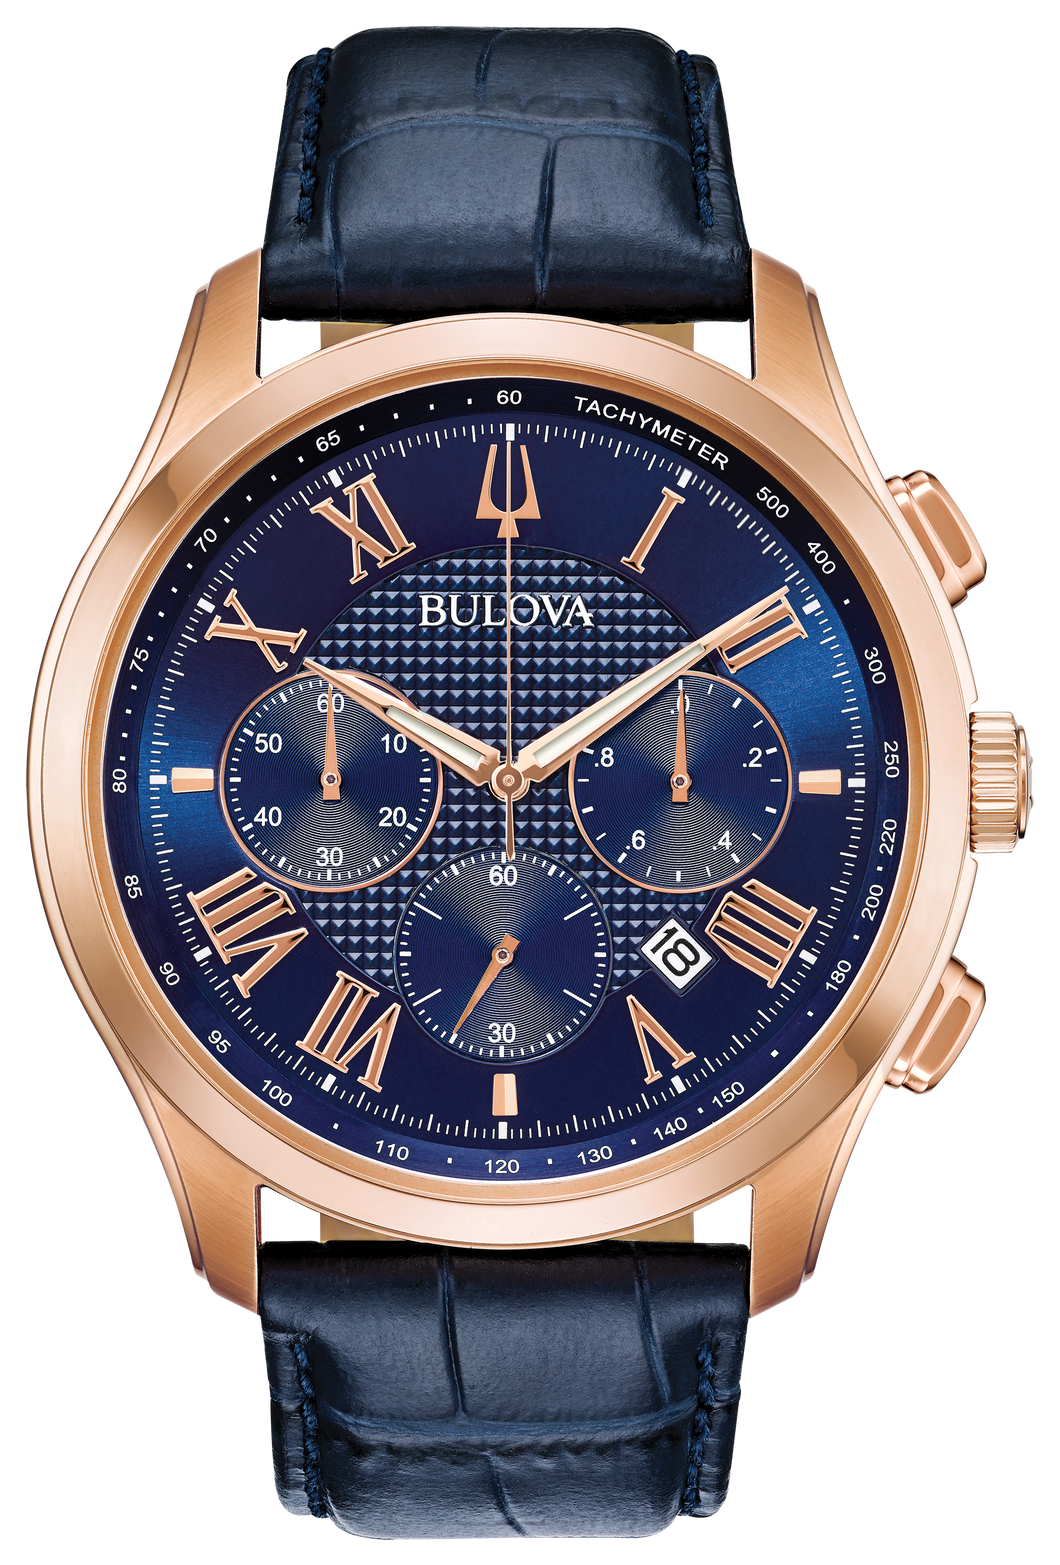 Bulova Men's Quartz Wilton Strap Watch - Product Code - 97B170